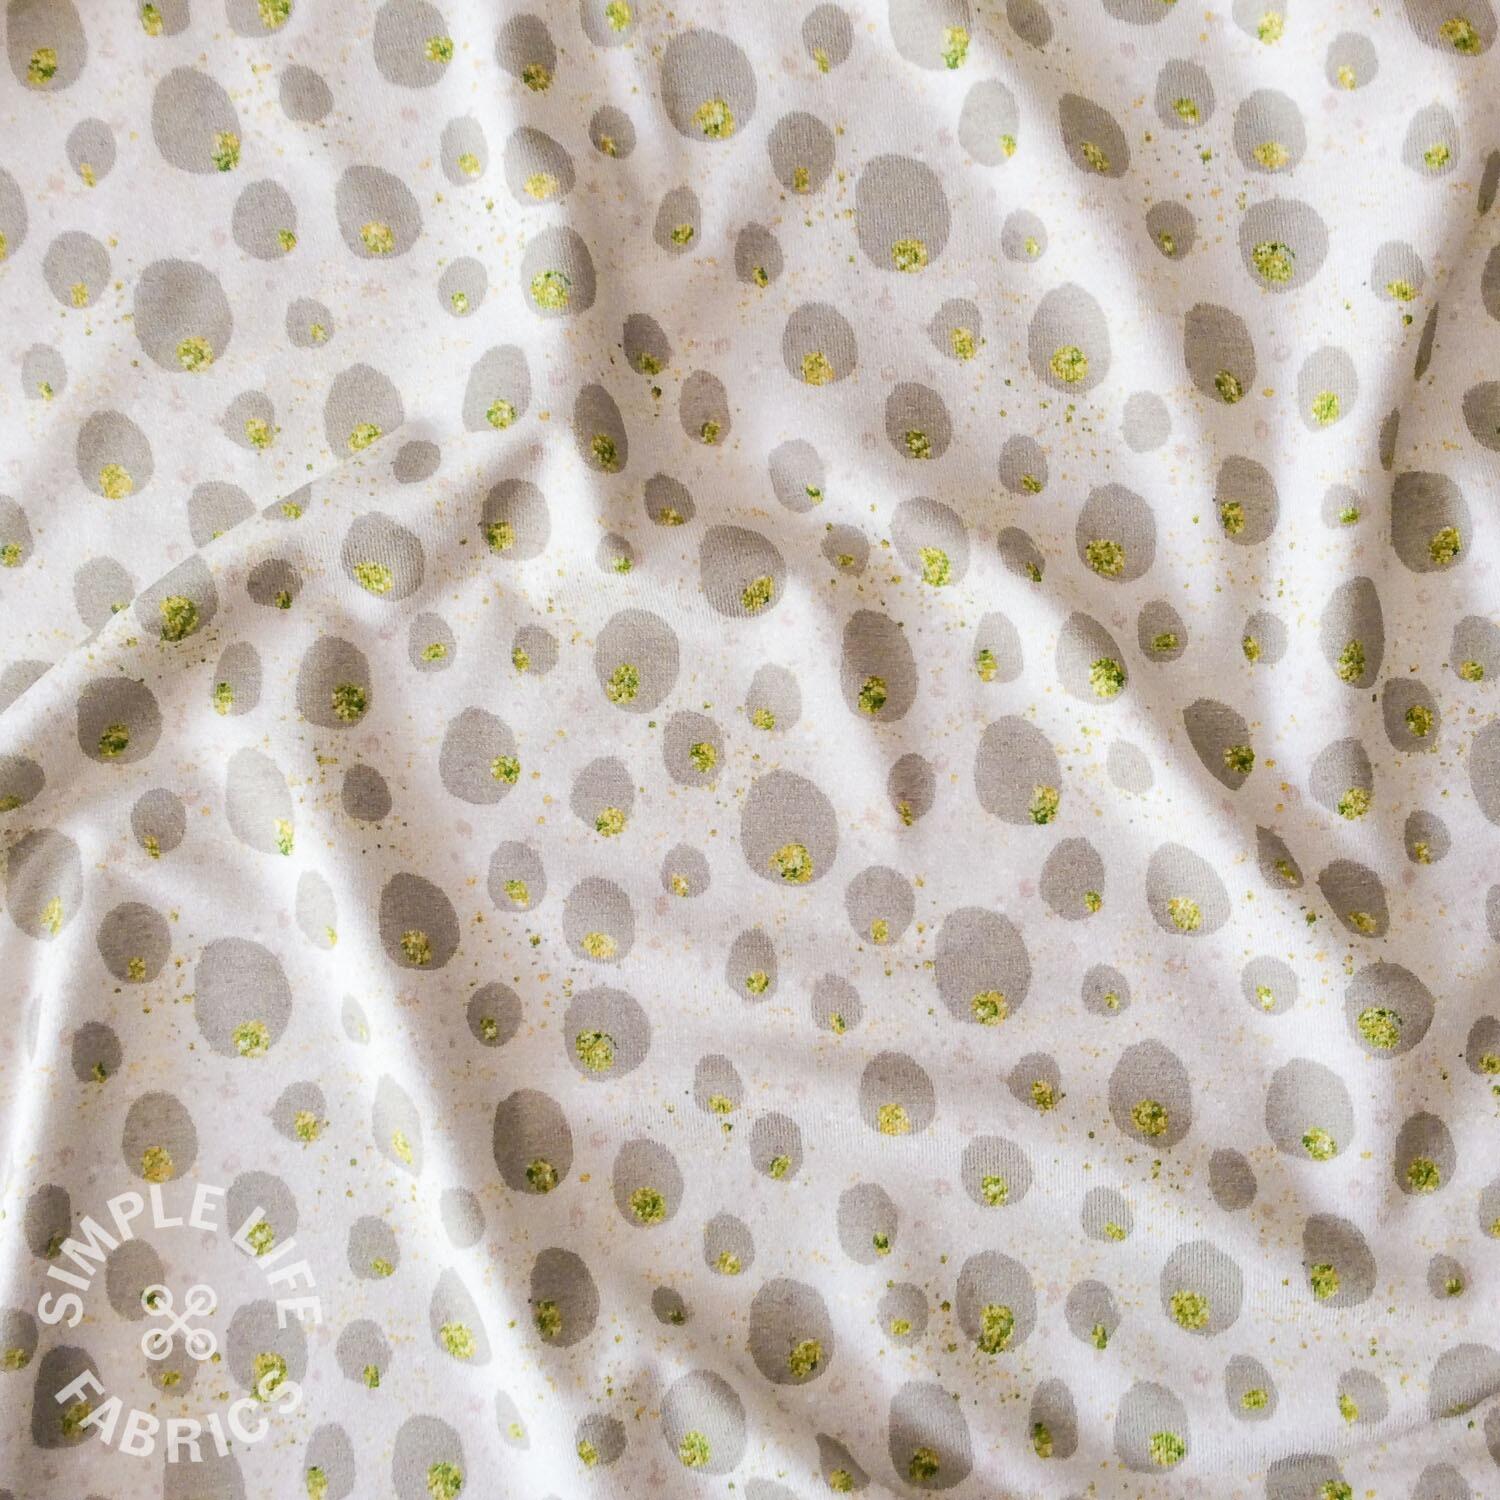 Dots spots viscose jersey cream fabric